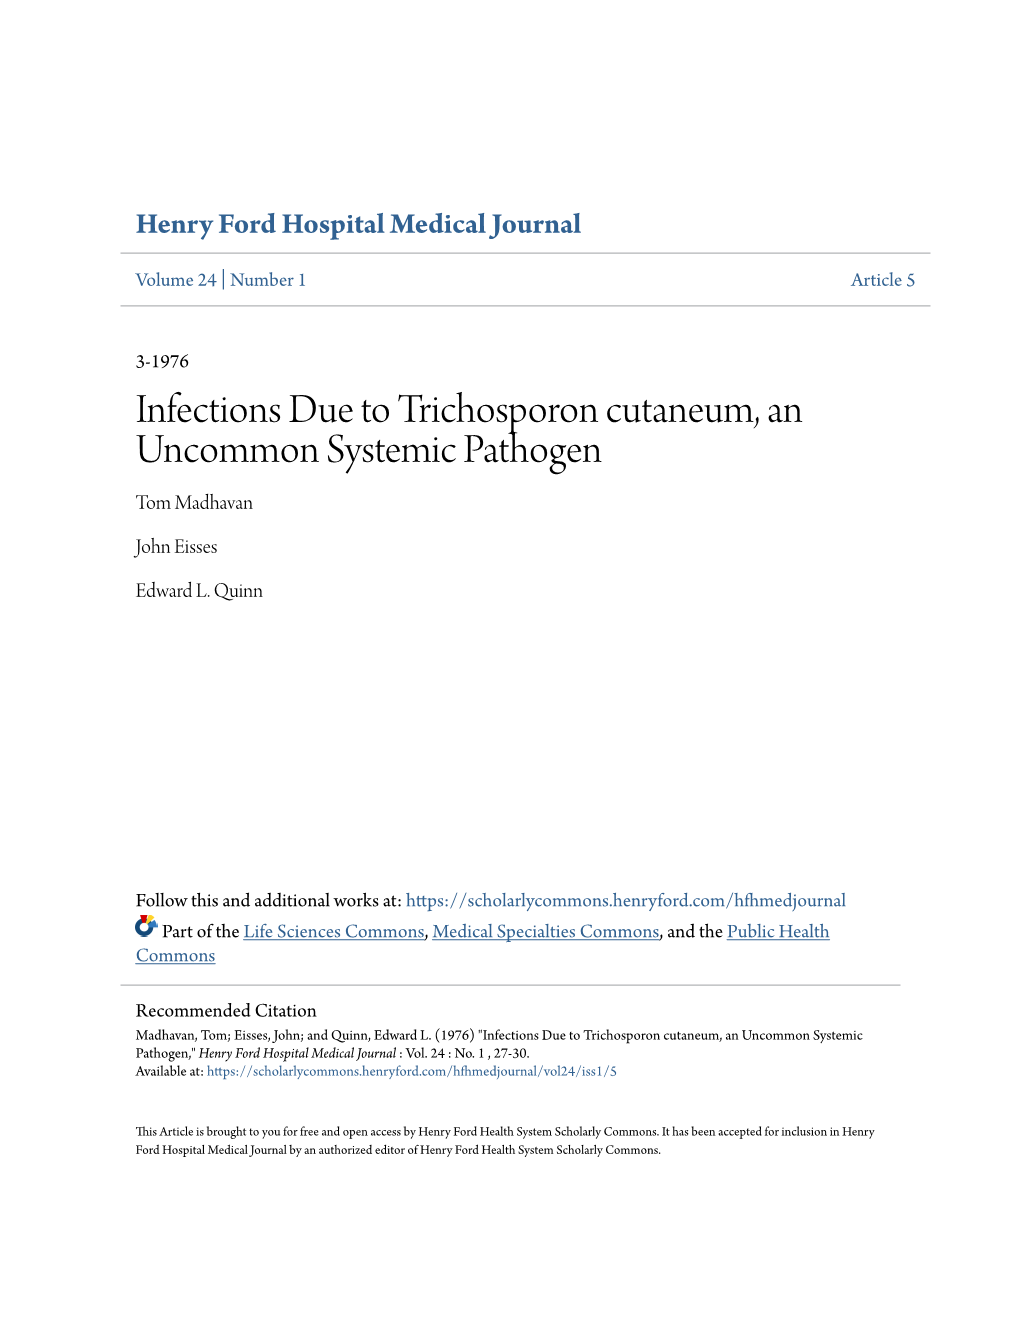 Infections Due to Trichosporon Cutaneum, an Uncommon Systemic Pathogen Tom Madhavan